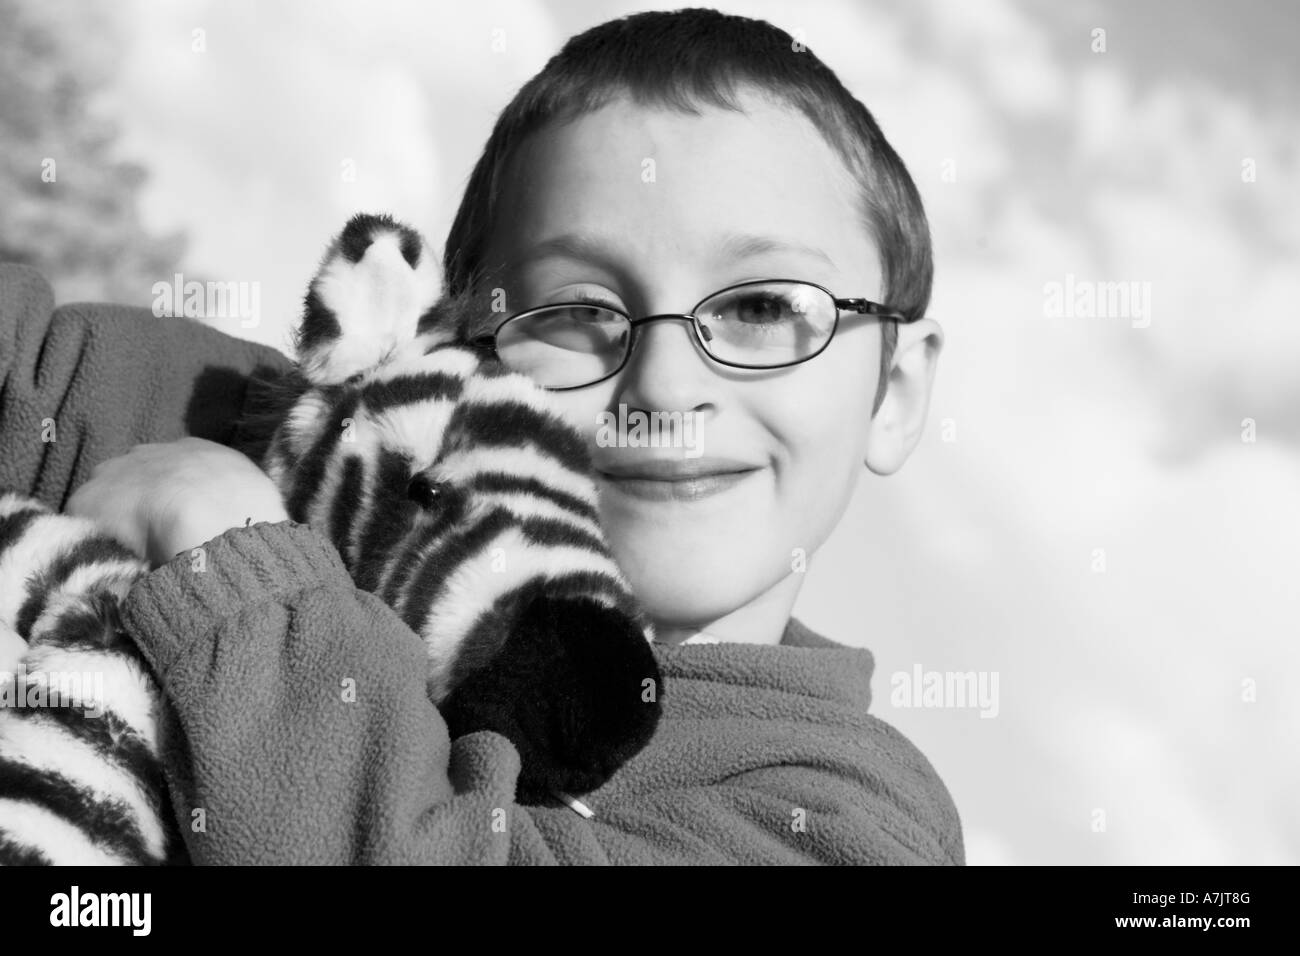 B W young boy wearing glasses smiling hugging a stuffed zebra doll Stock Photo